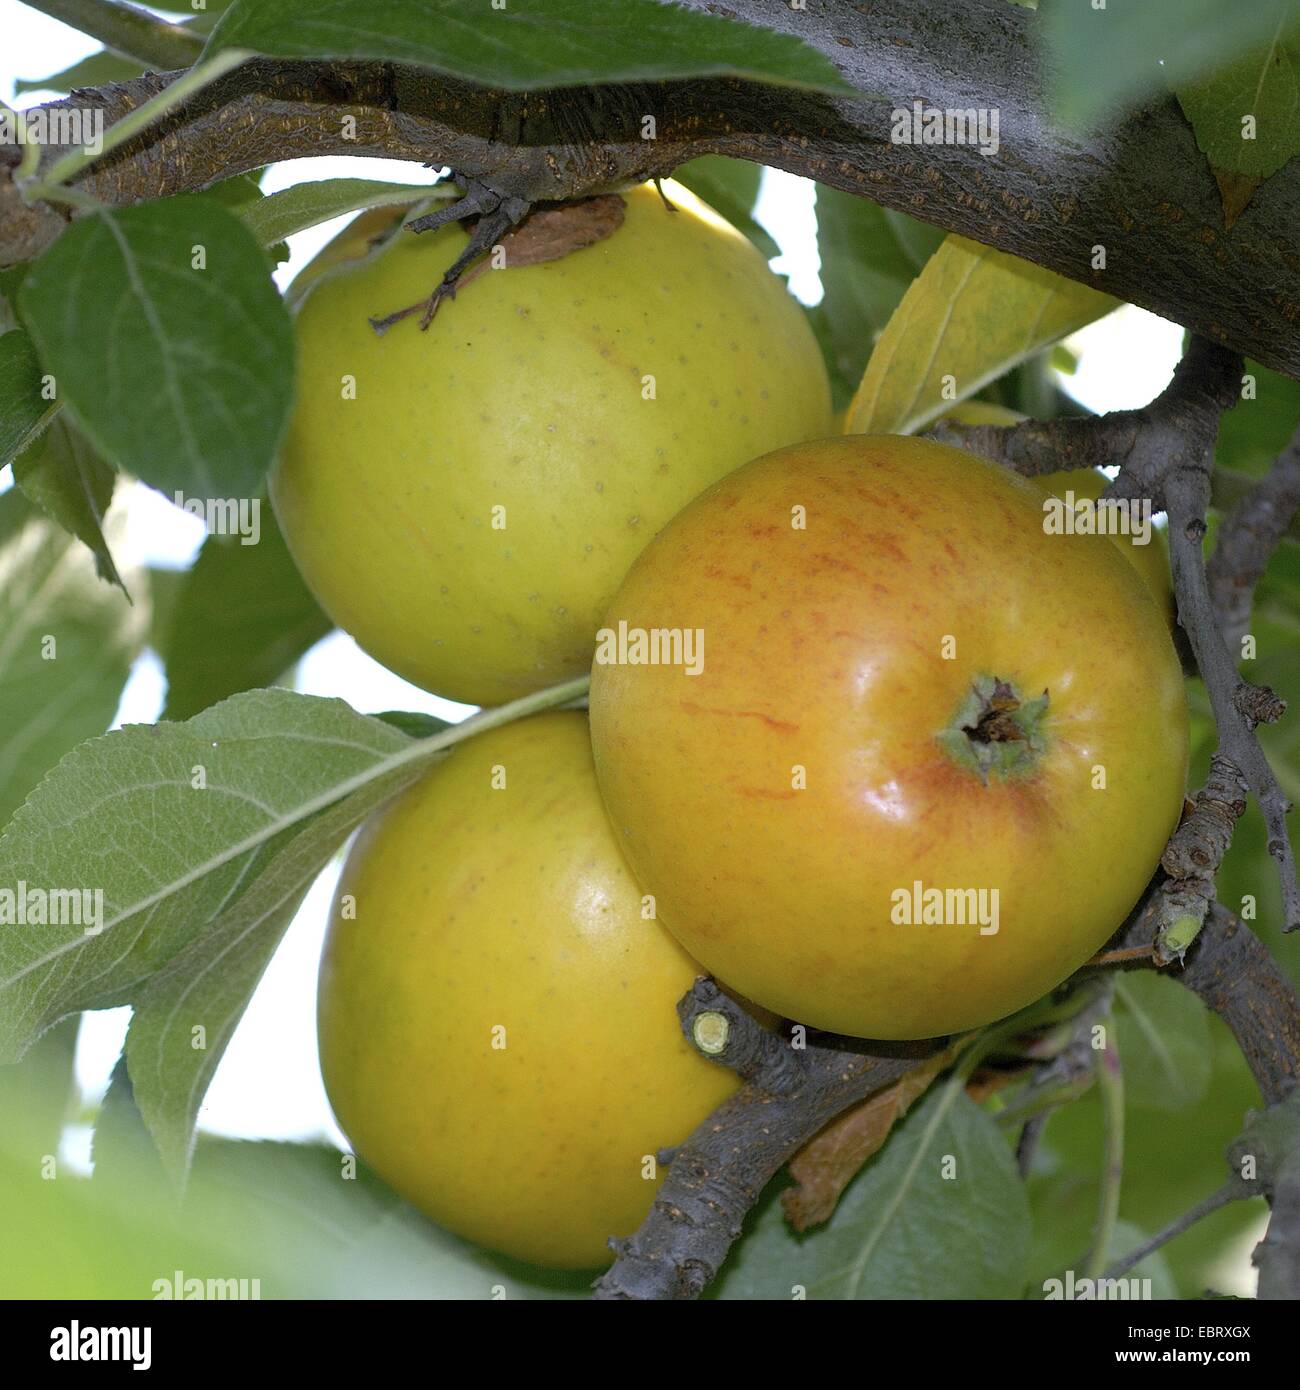 apple tree (Malus domestica 'Goldparmaene', Malus domestica Goldparmaene), cultivar Goldparmaene, apples on a tree Stock Photo